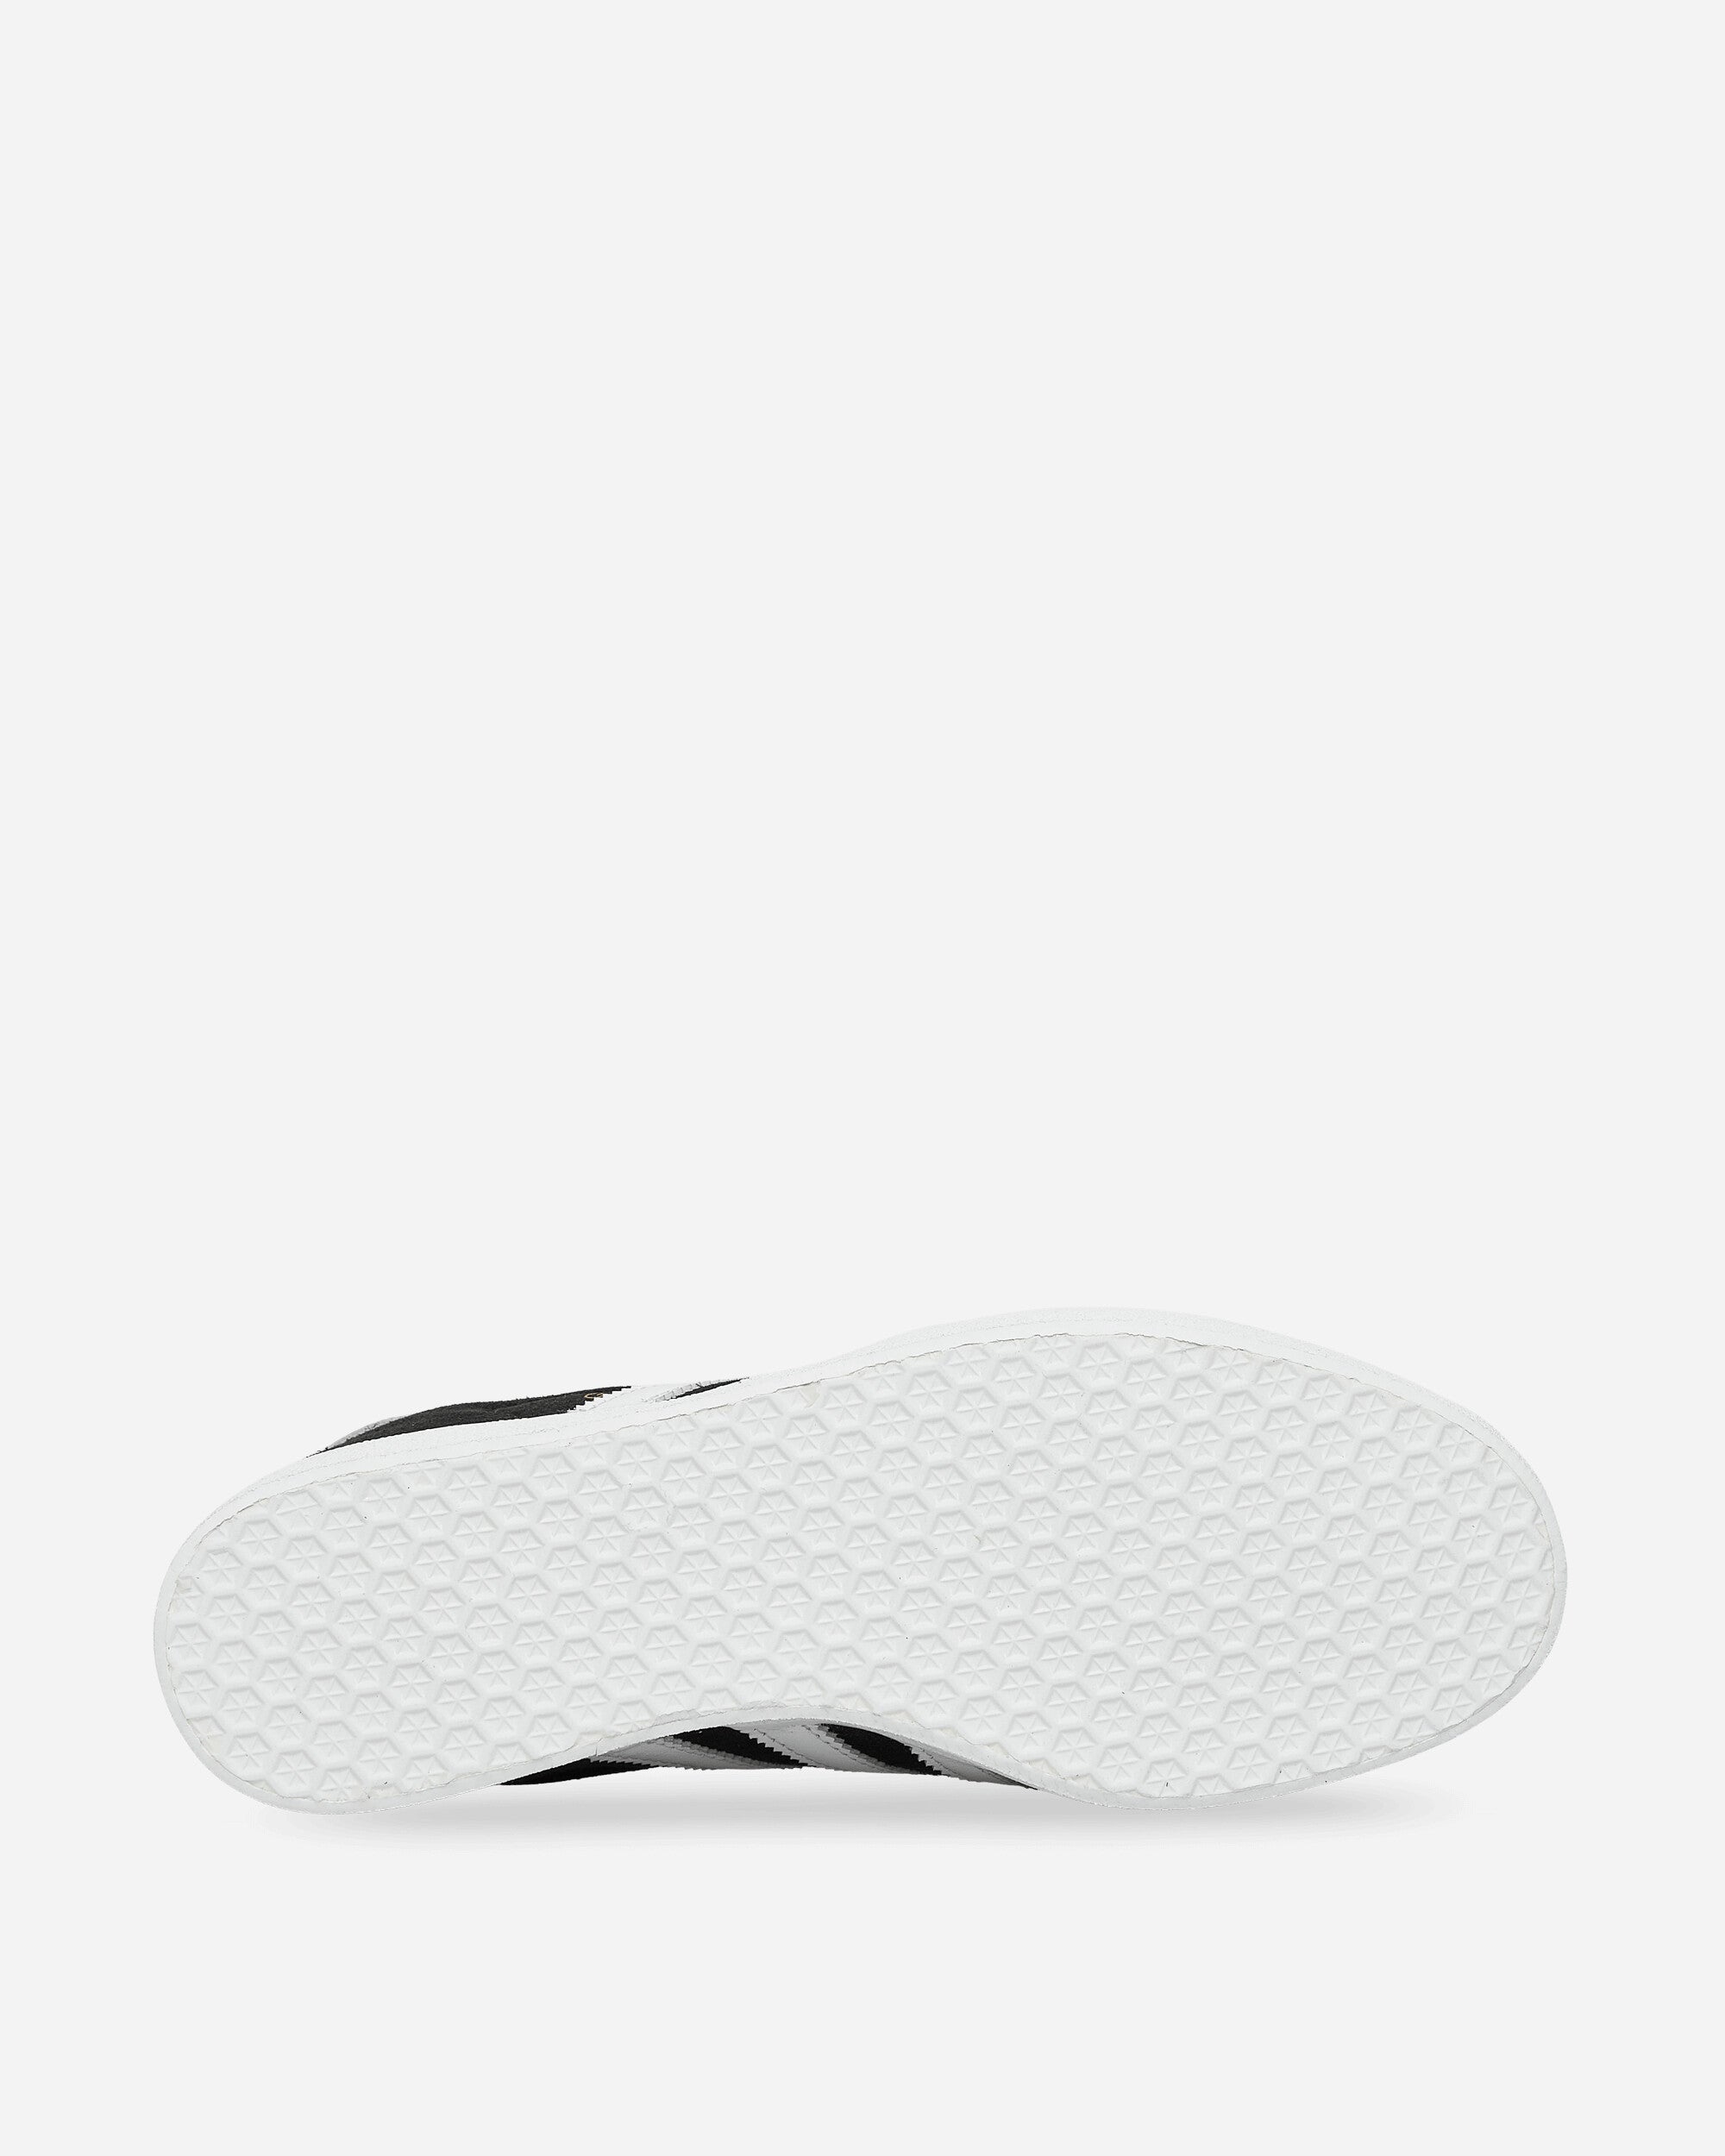 adidas Gazelle 85 Core Black/Ftwr White Sneakers Low IE2166 001